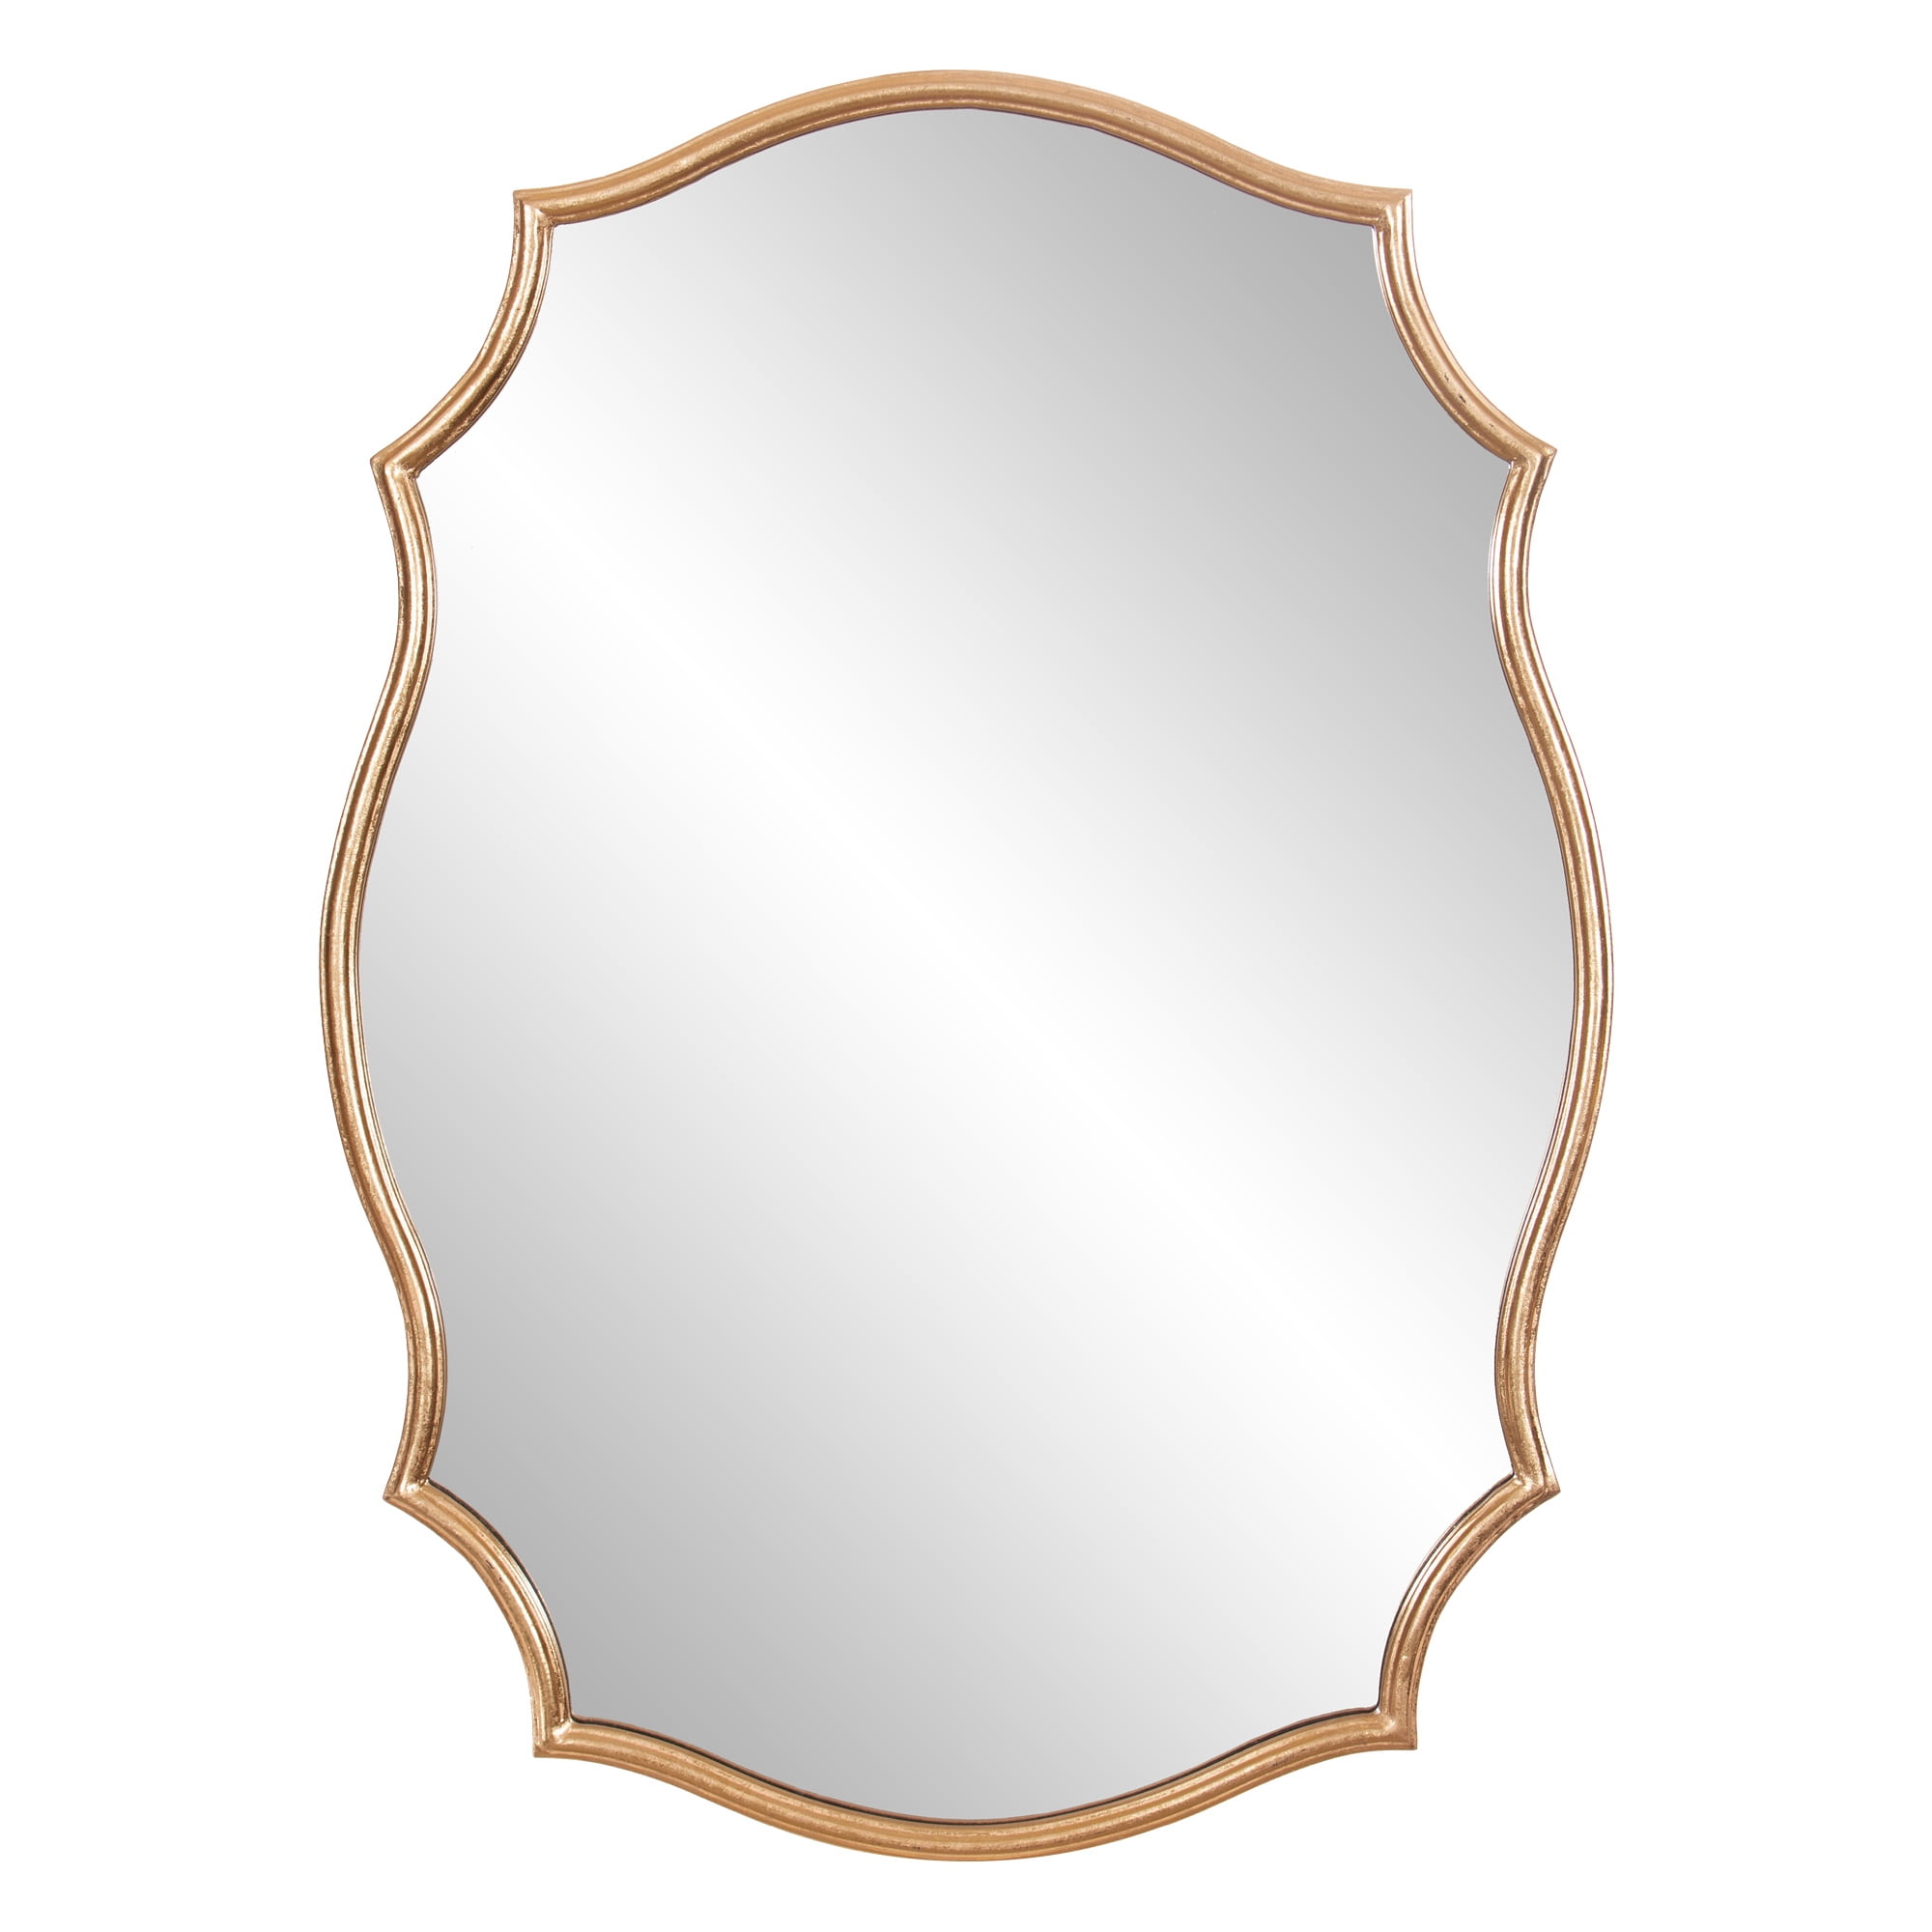 Gold Decorative Mirror Sale, 56% OFF | www.ingeniovirtual.com